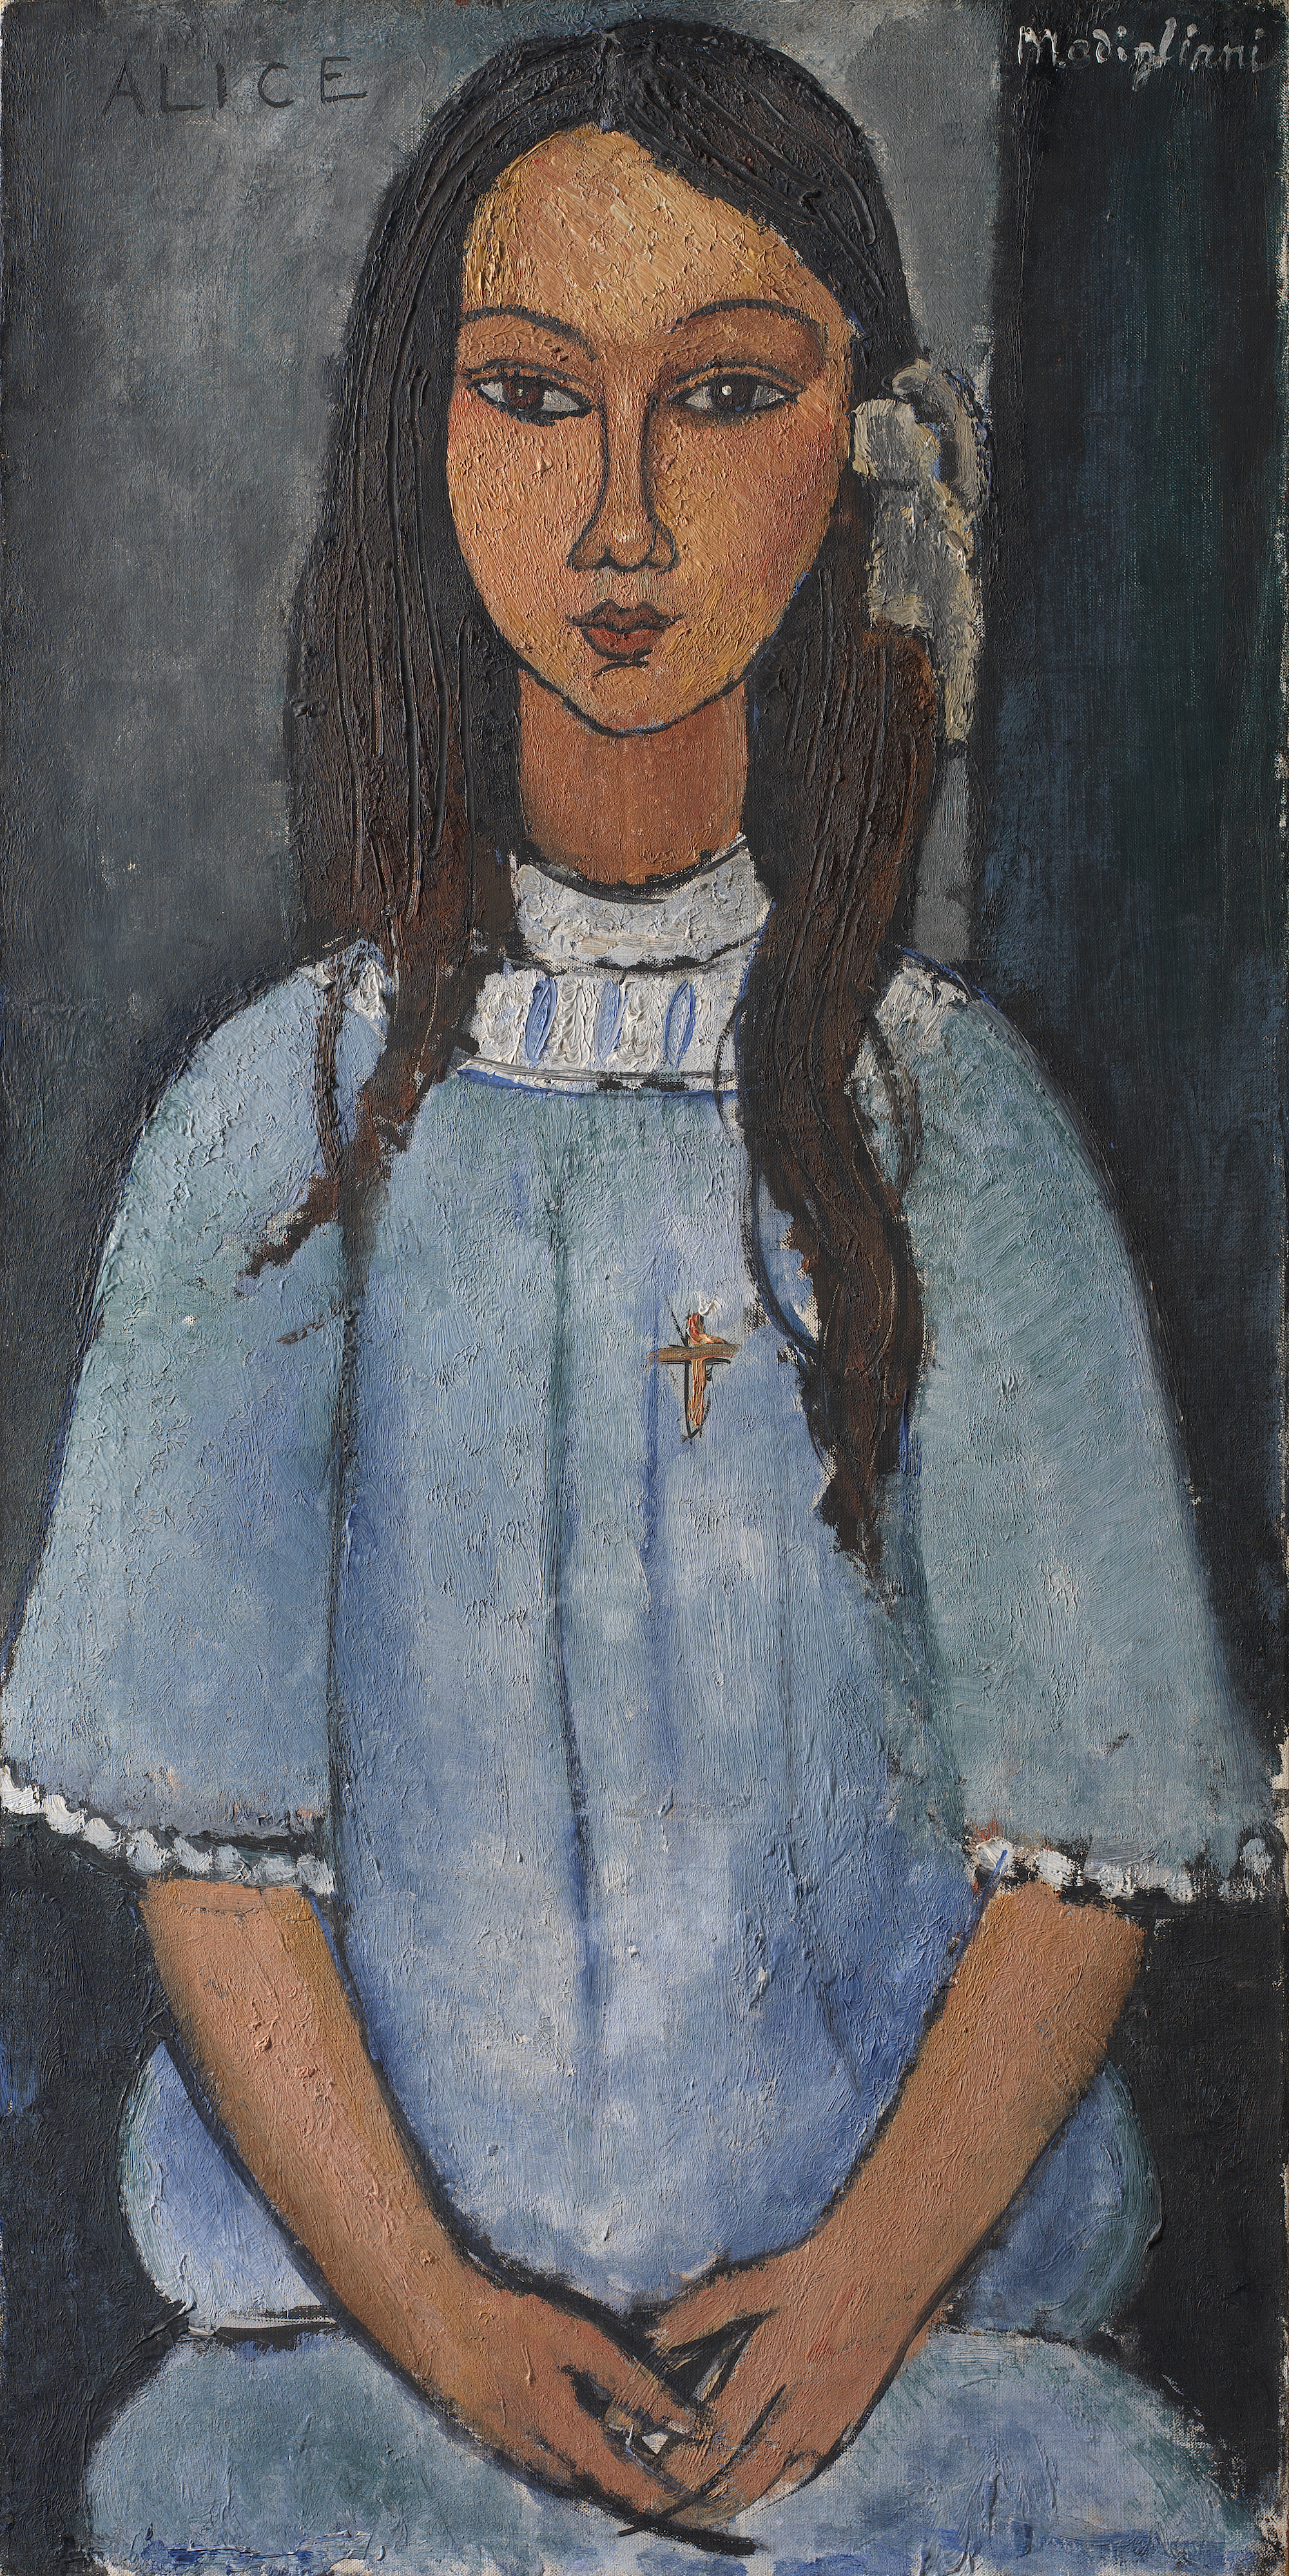 Alice by Amedeo Modigliani - c. 1918 